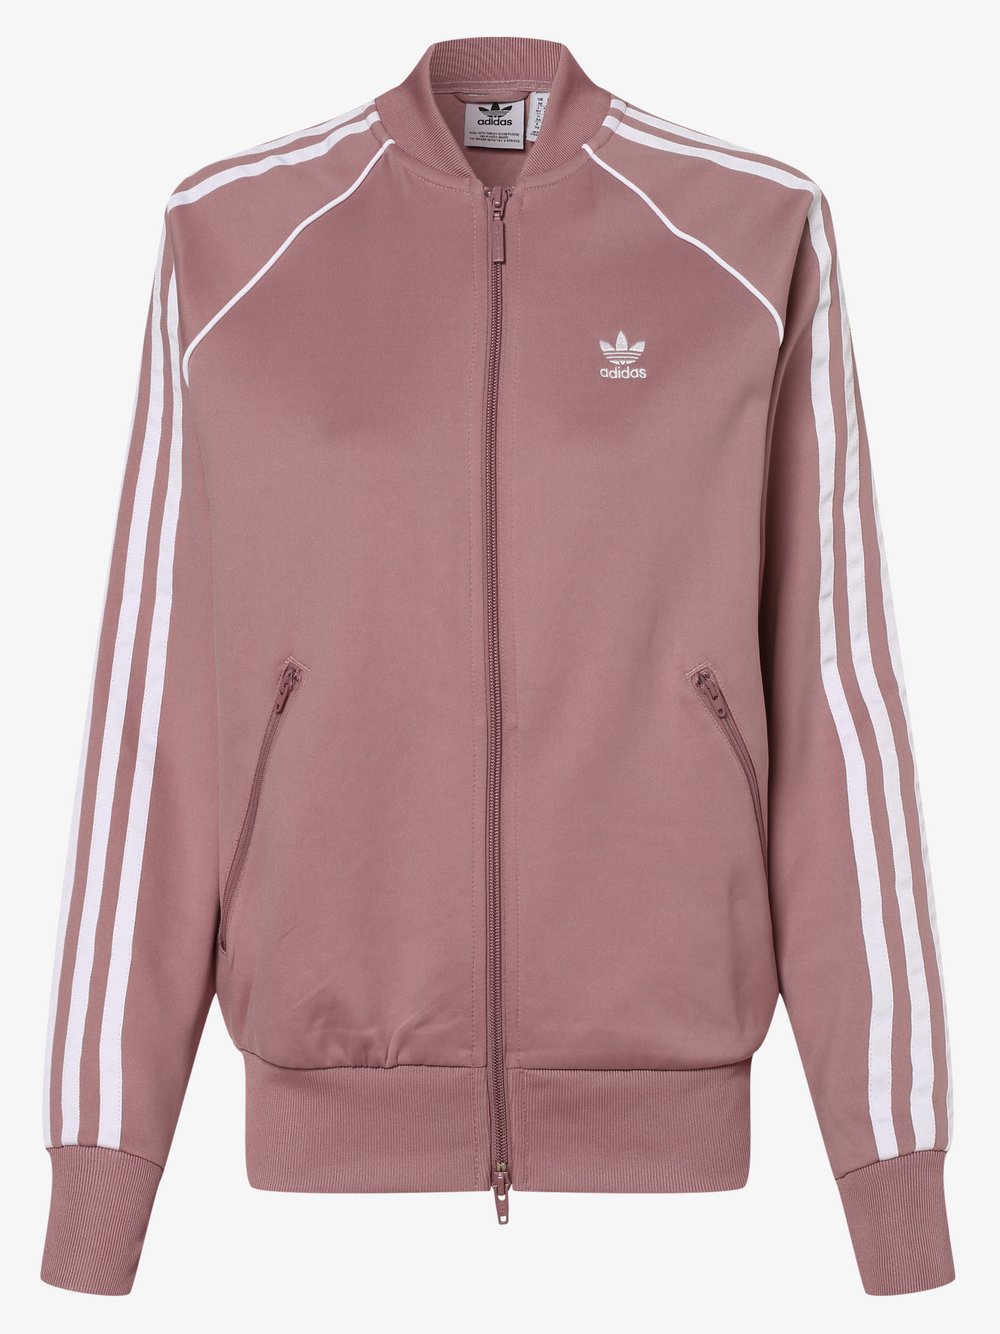 Adidas Originals - Damska bluza rozpinana, różowy